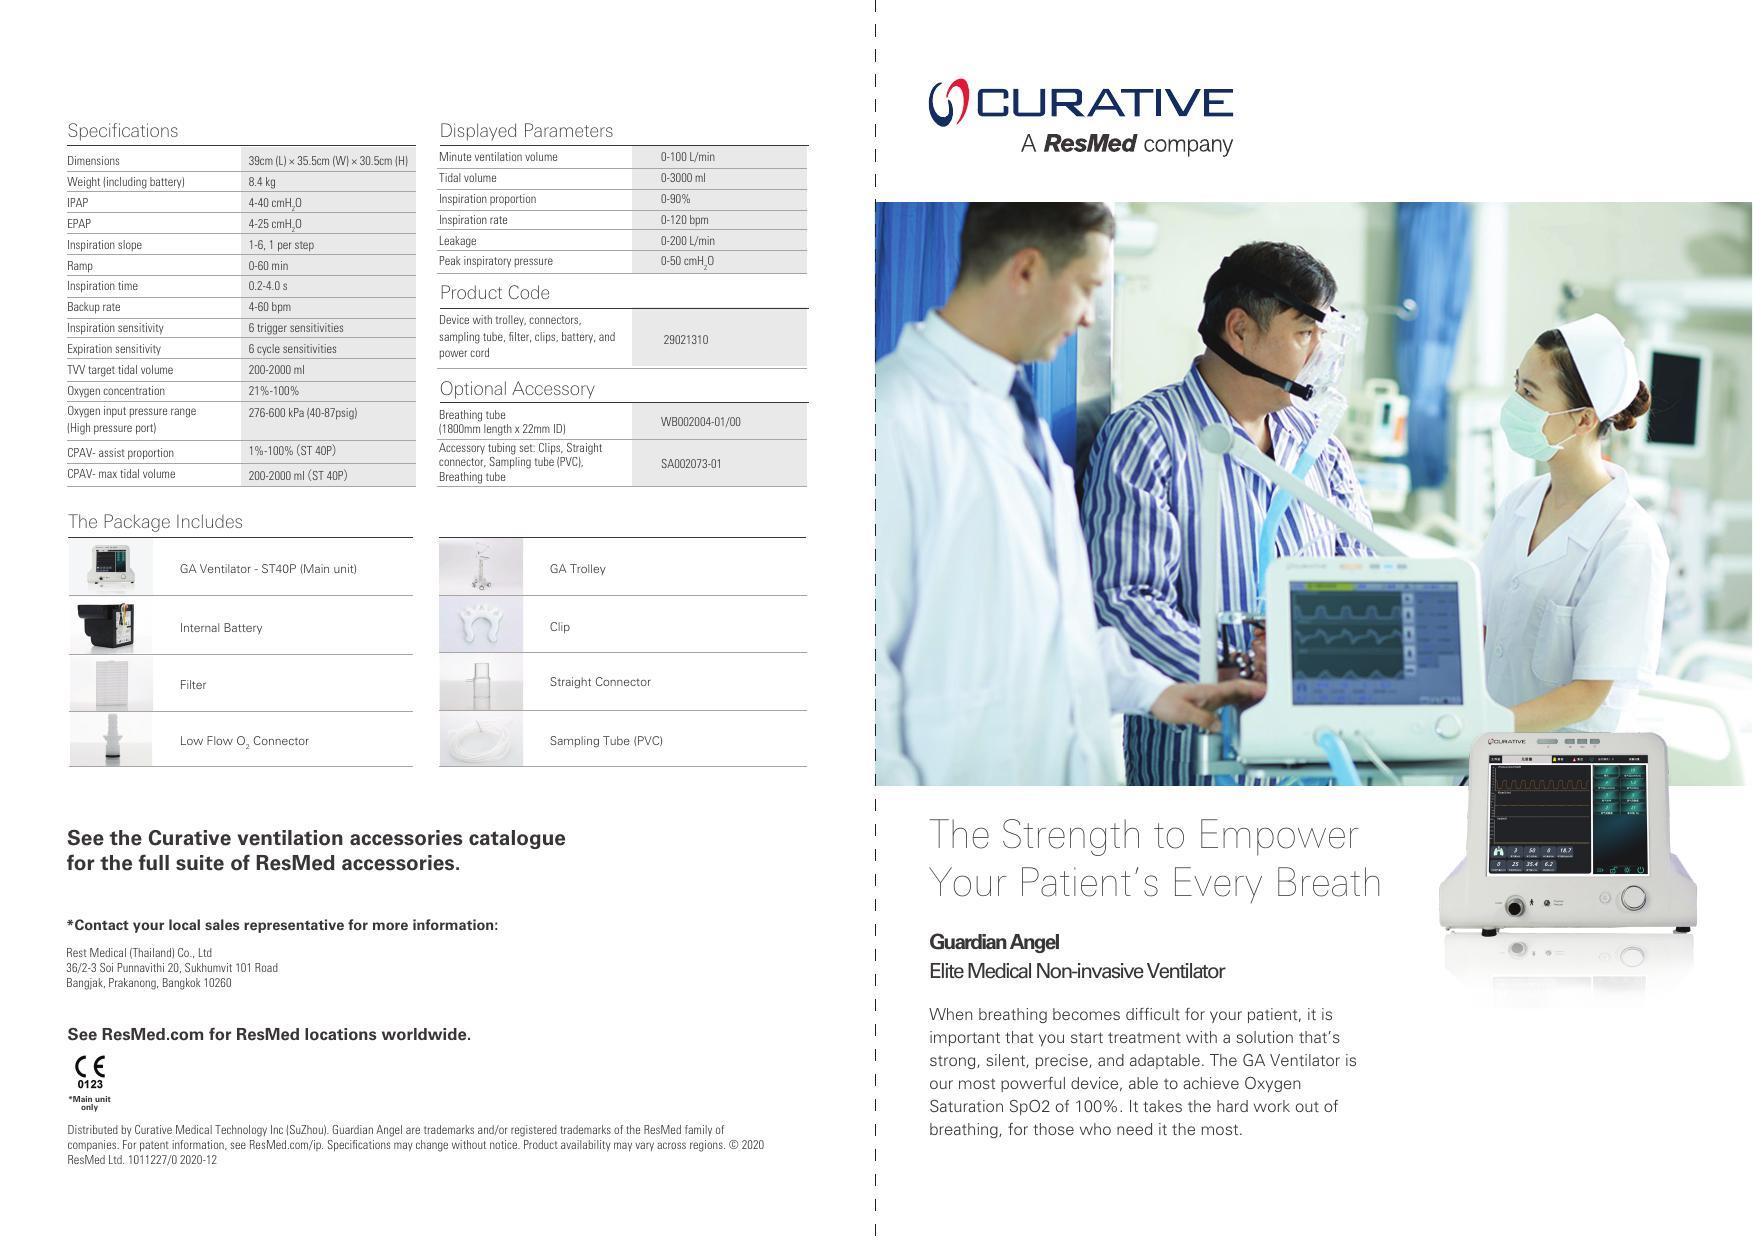 guardian-angel-elite-medical-non-invasive-ventilator-user-manual.pdf